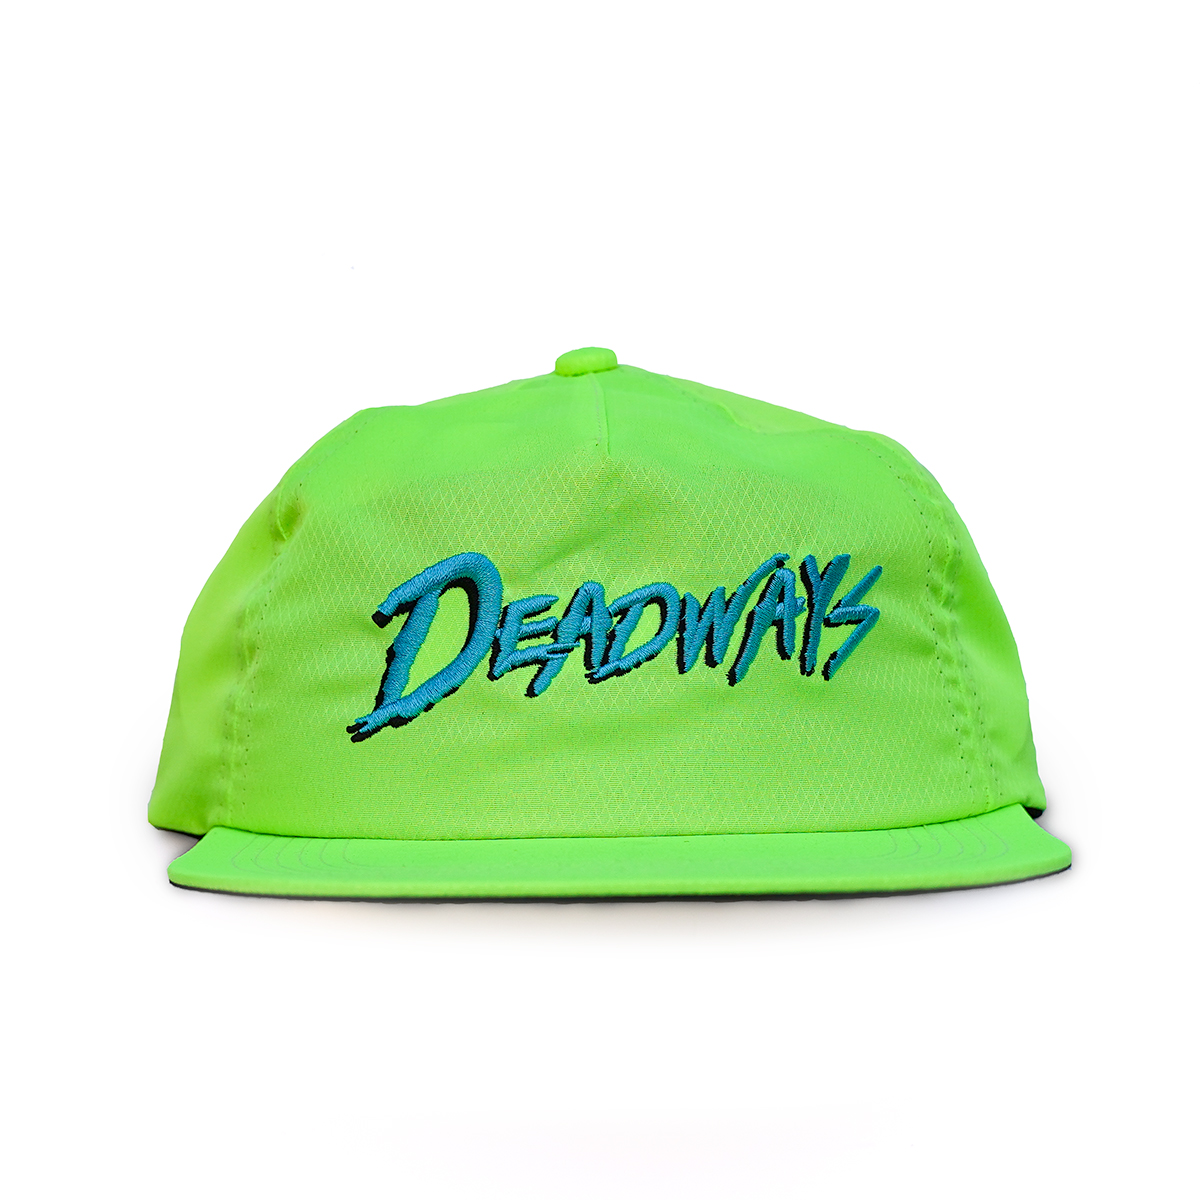 DEADWAYS Watcher Cap (Neon Green) | Lazada PH